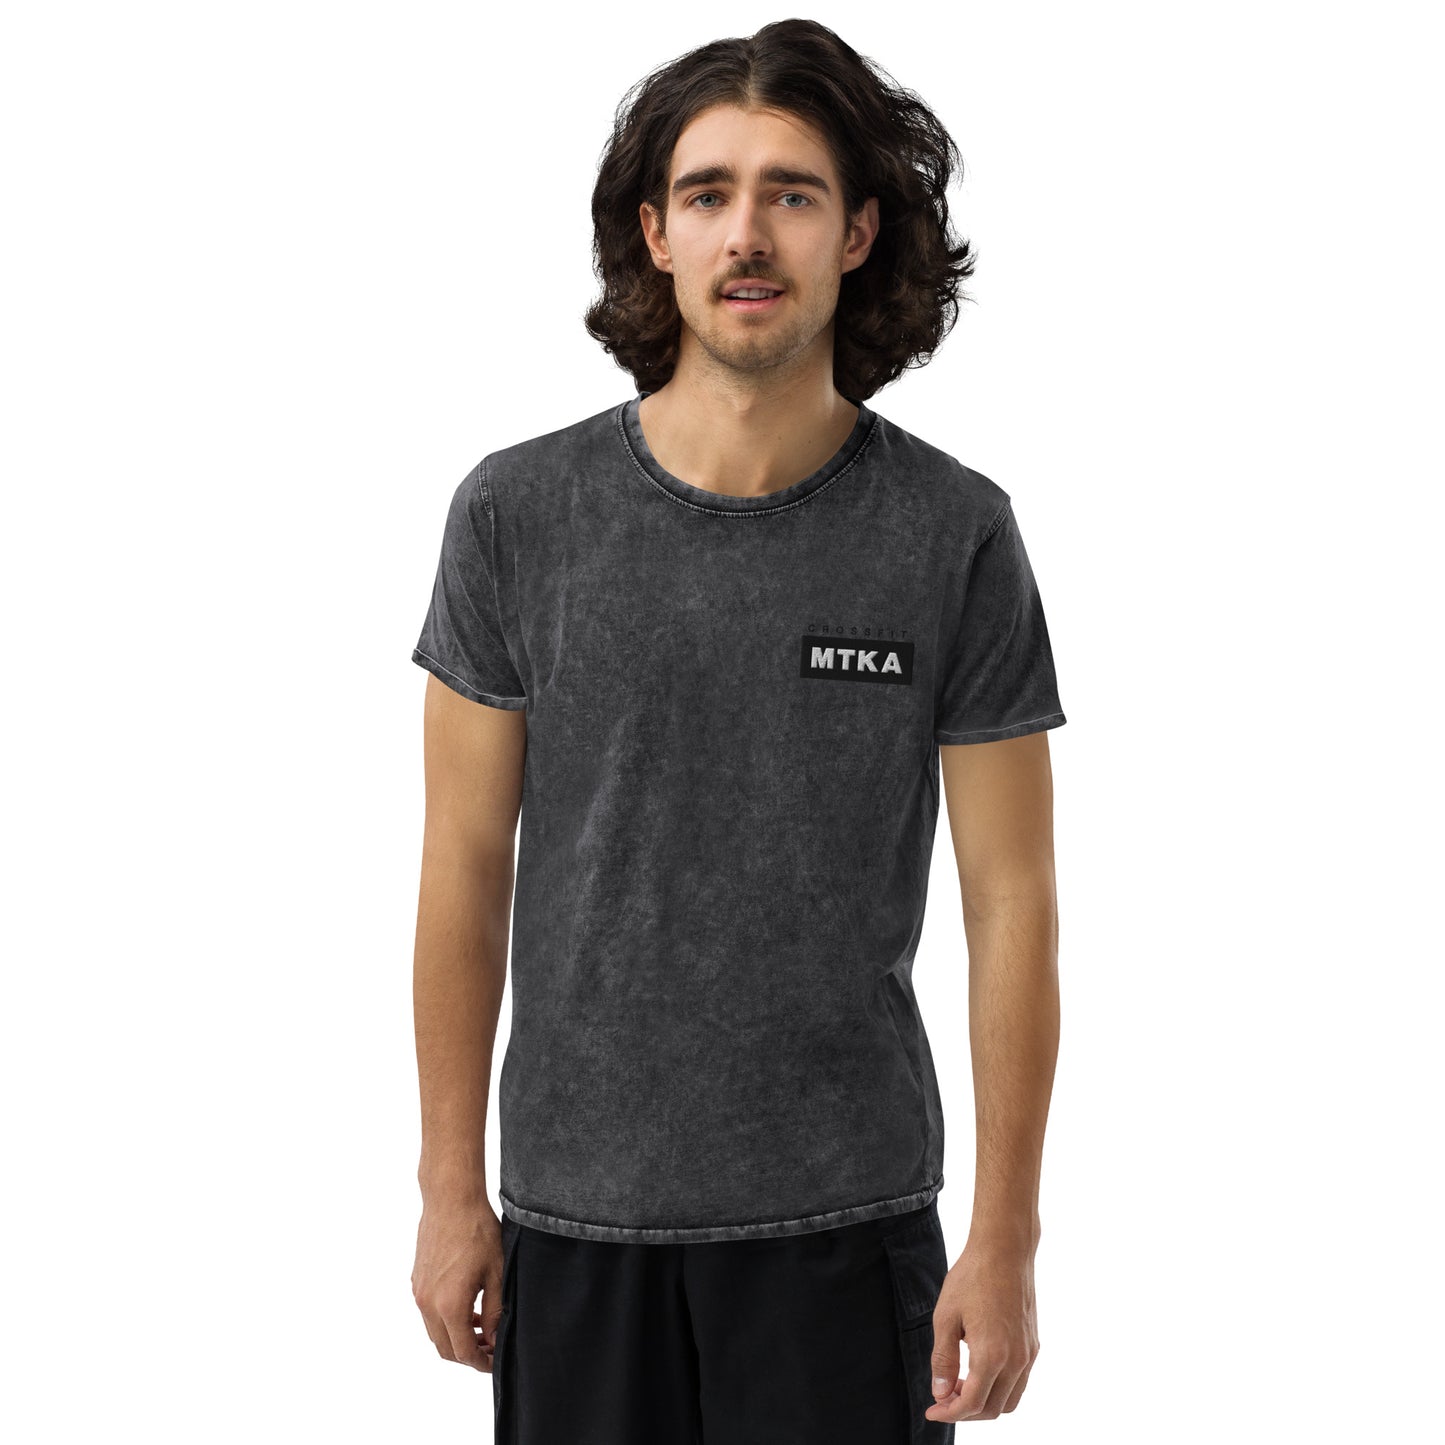 Denim effect T-Shirt | multiple colors | CrossFit Minnetonka